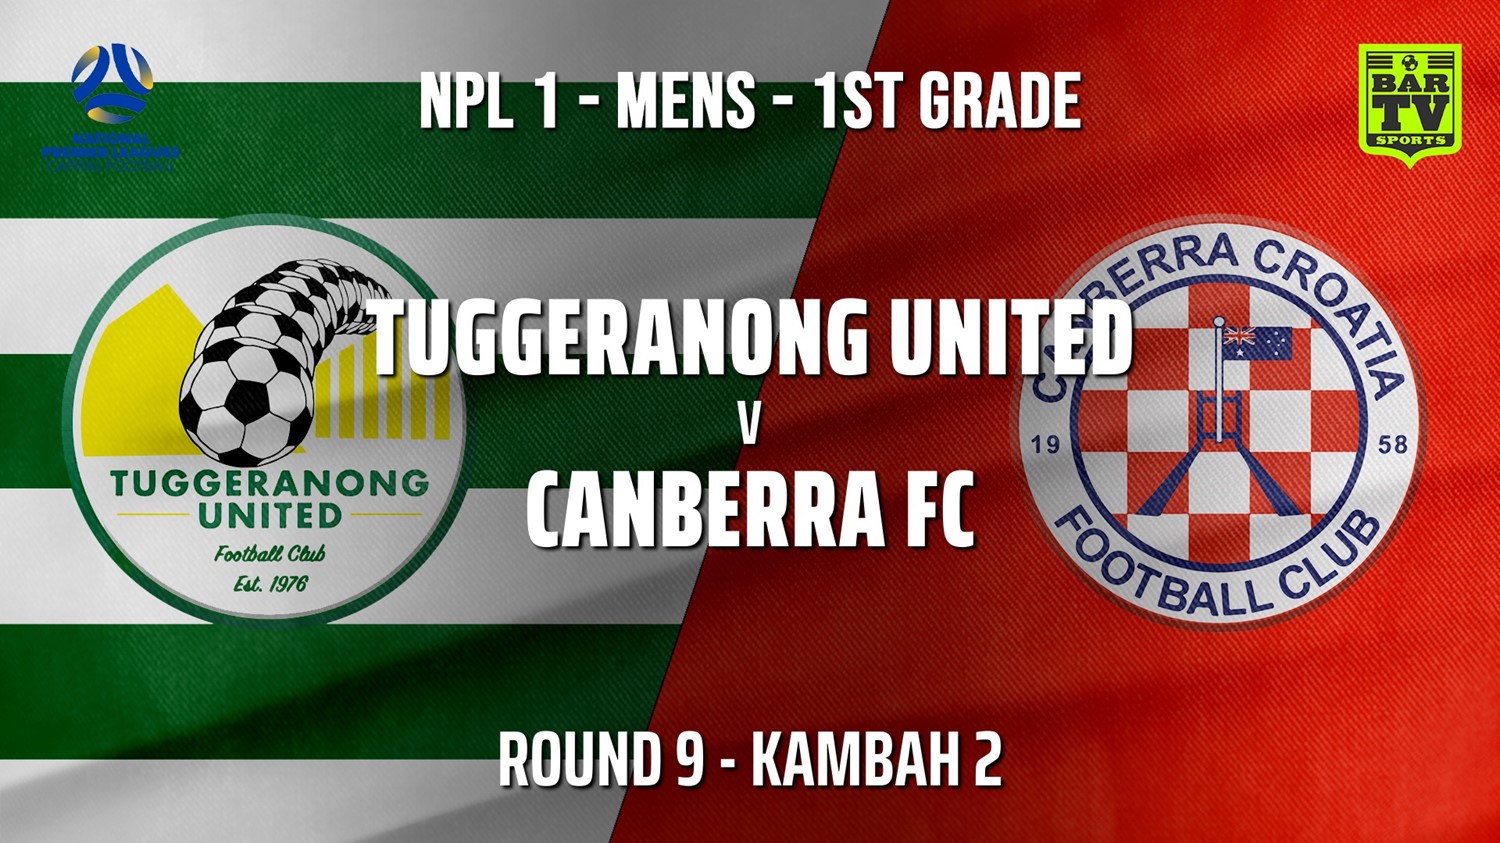 210613-Capital NPL Round 9 - Tuggeranong United FC v Canberra FC Minigame Slate Image